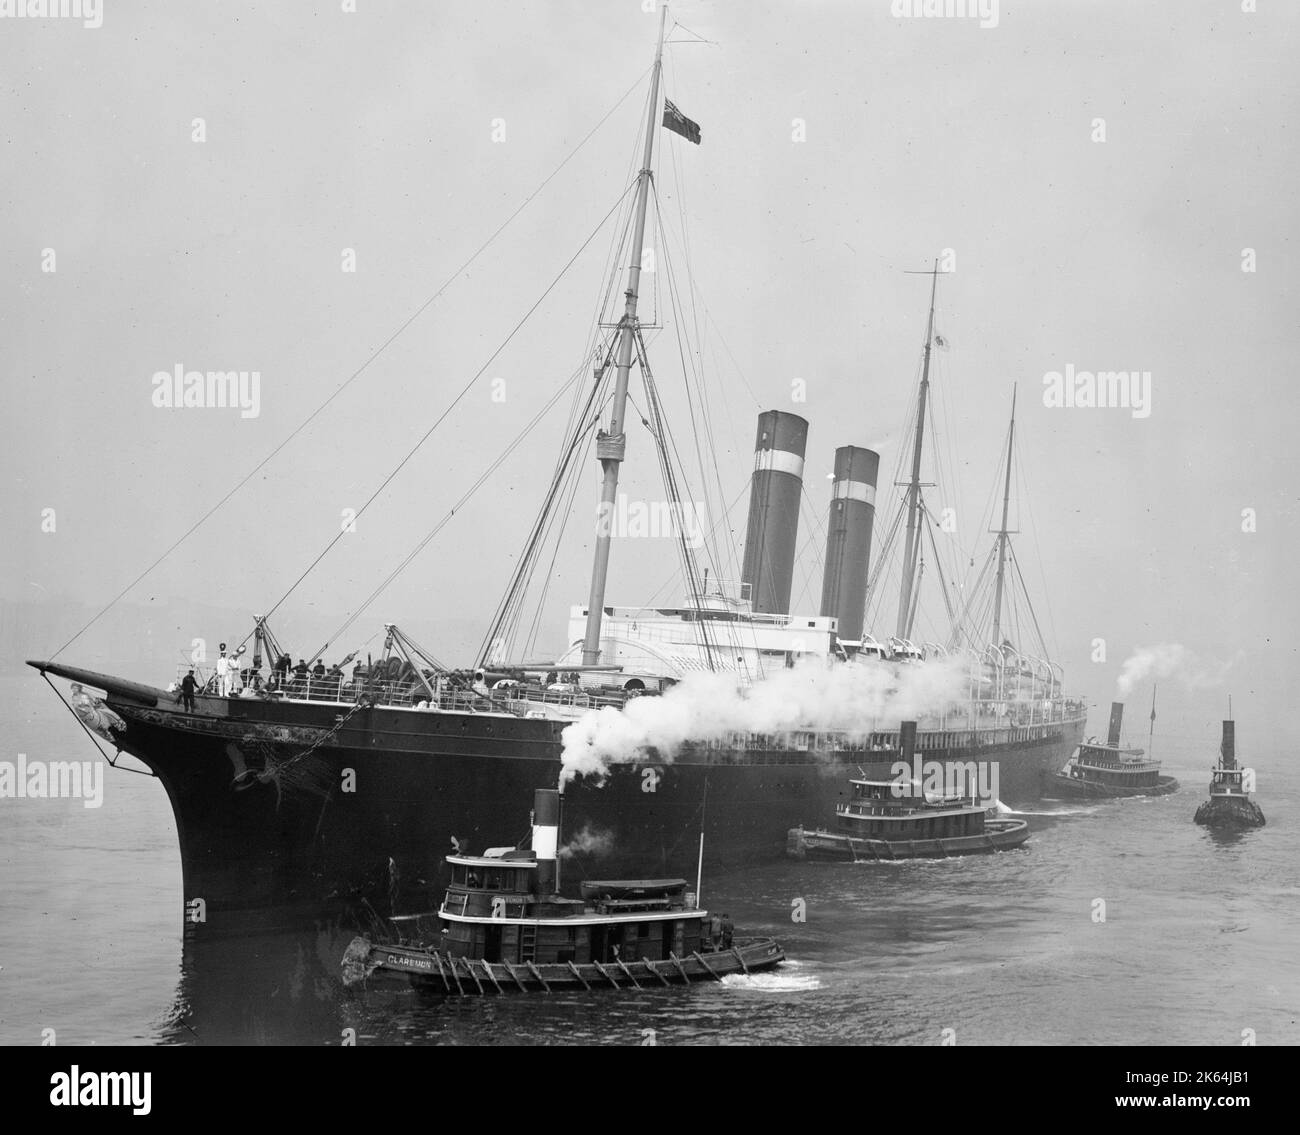 Der US-amerikanische Seeschiff USS City of New York kommt am 9. August 1914 in NYC an. Passagiere fliehen WW1 in Europa. Stockfoto